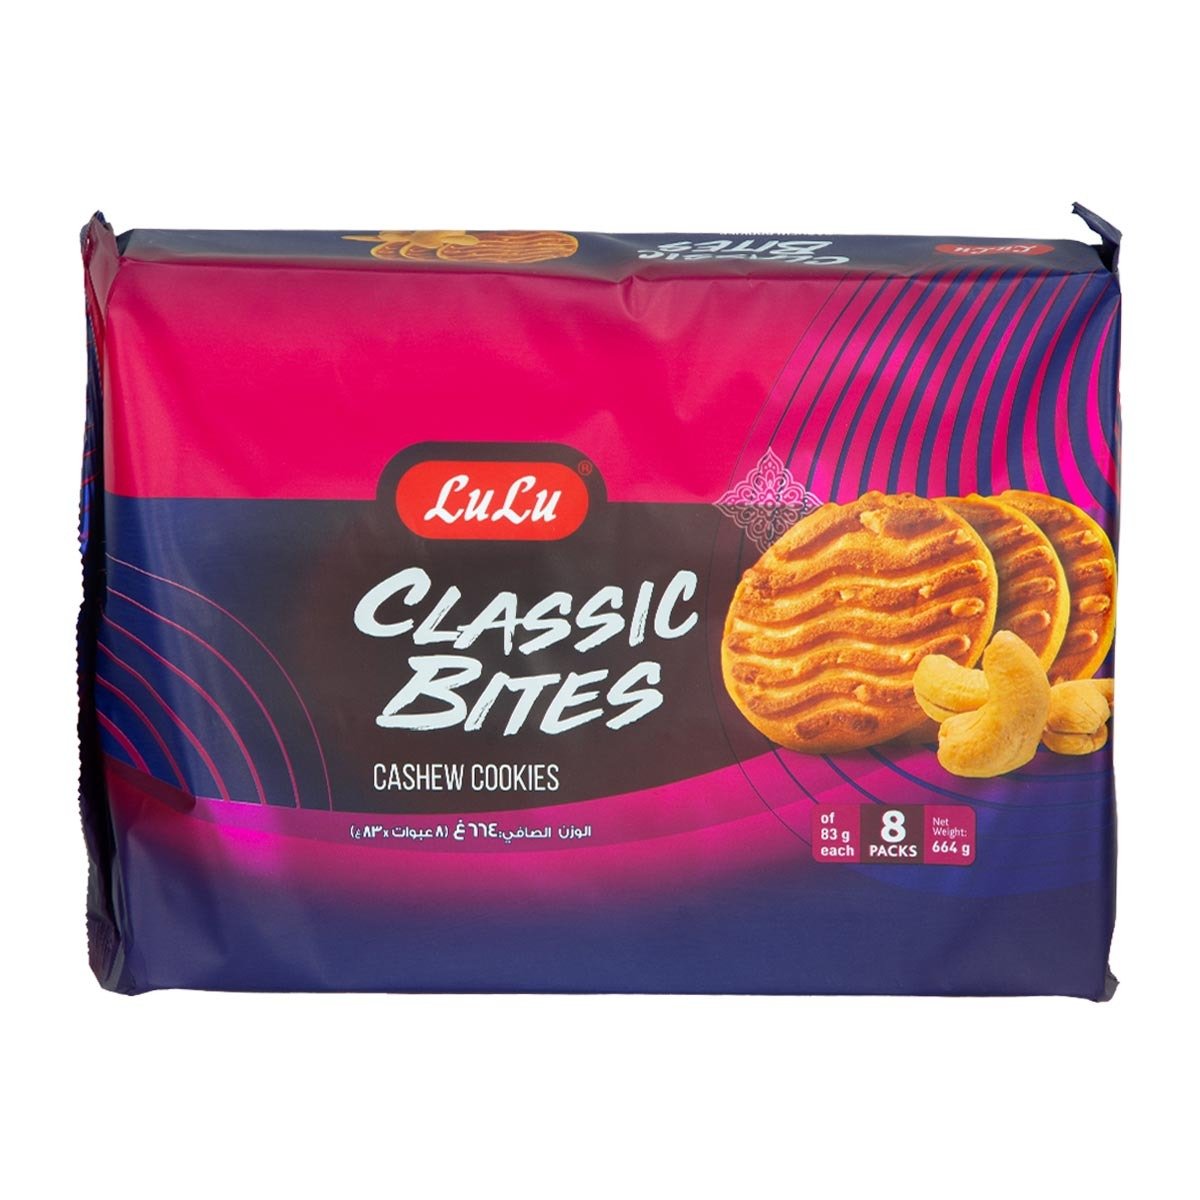 LuLu Classic Bites Cashew Cookies 83 g